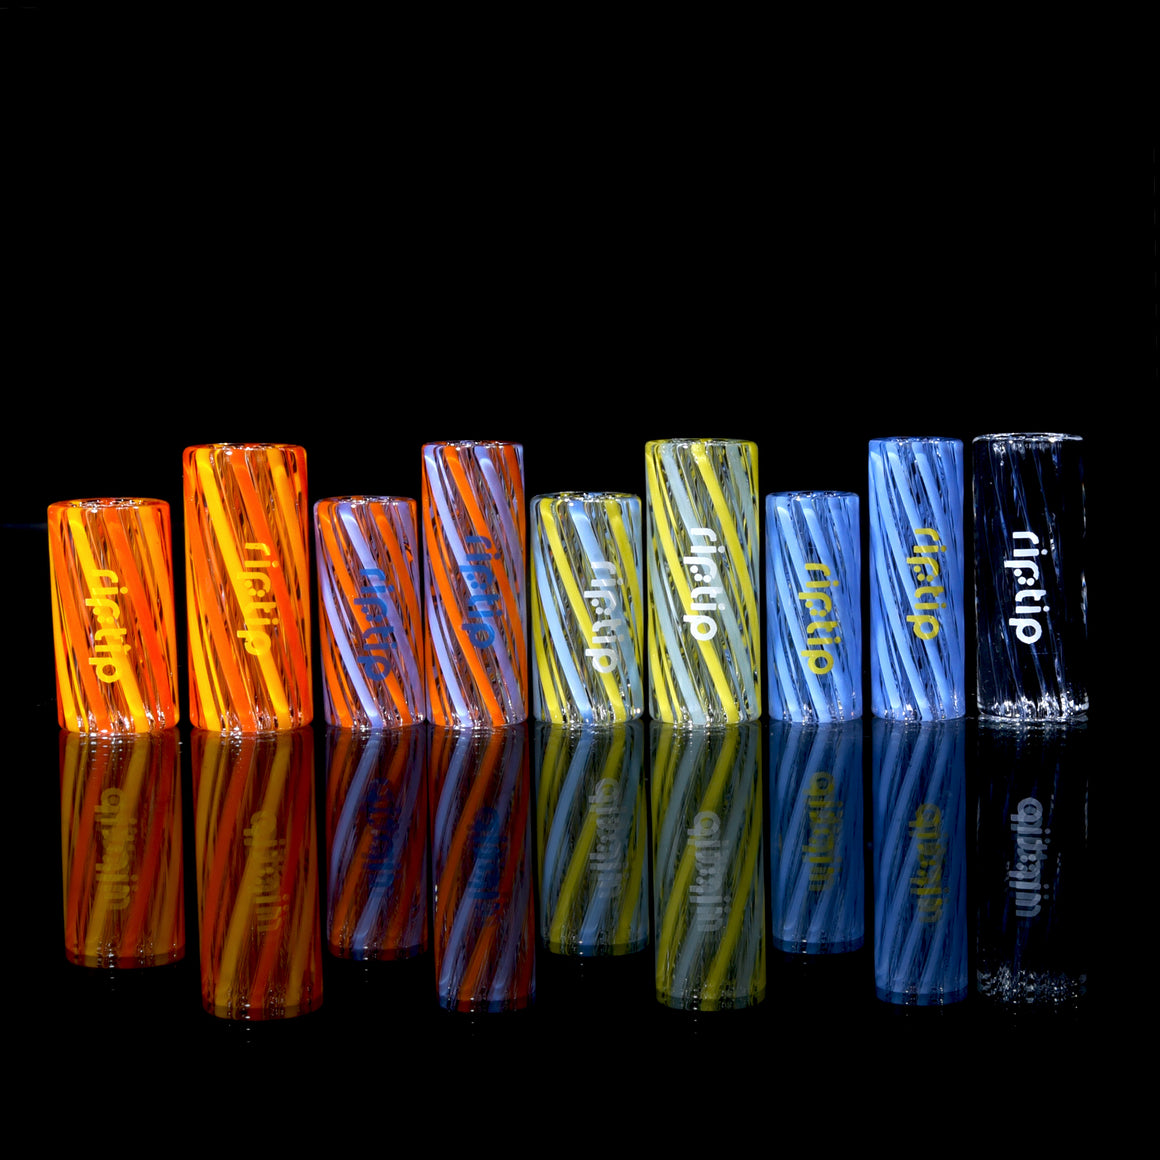 12mm Extra Long RipTip Filter Tips for Blunts, Joints, etc. - Celestine